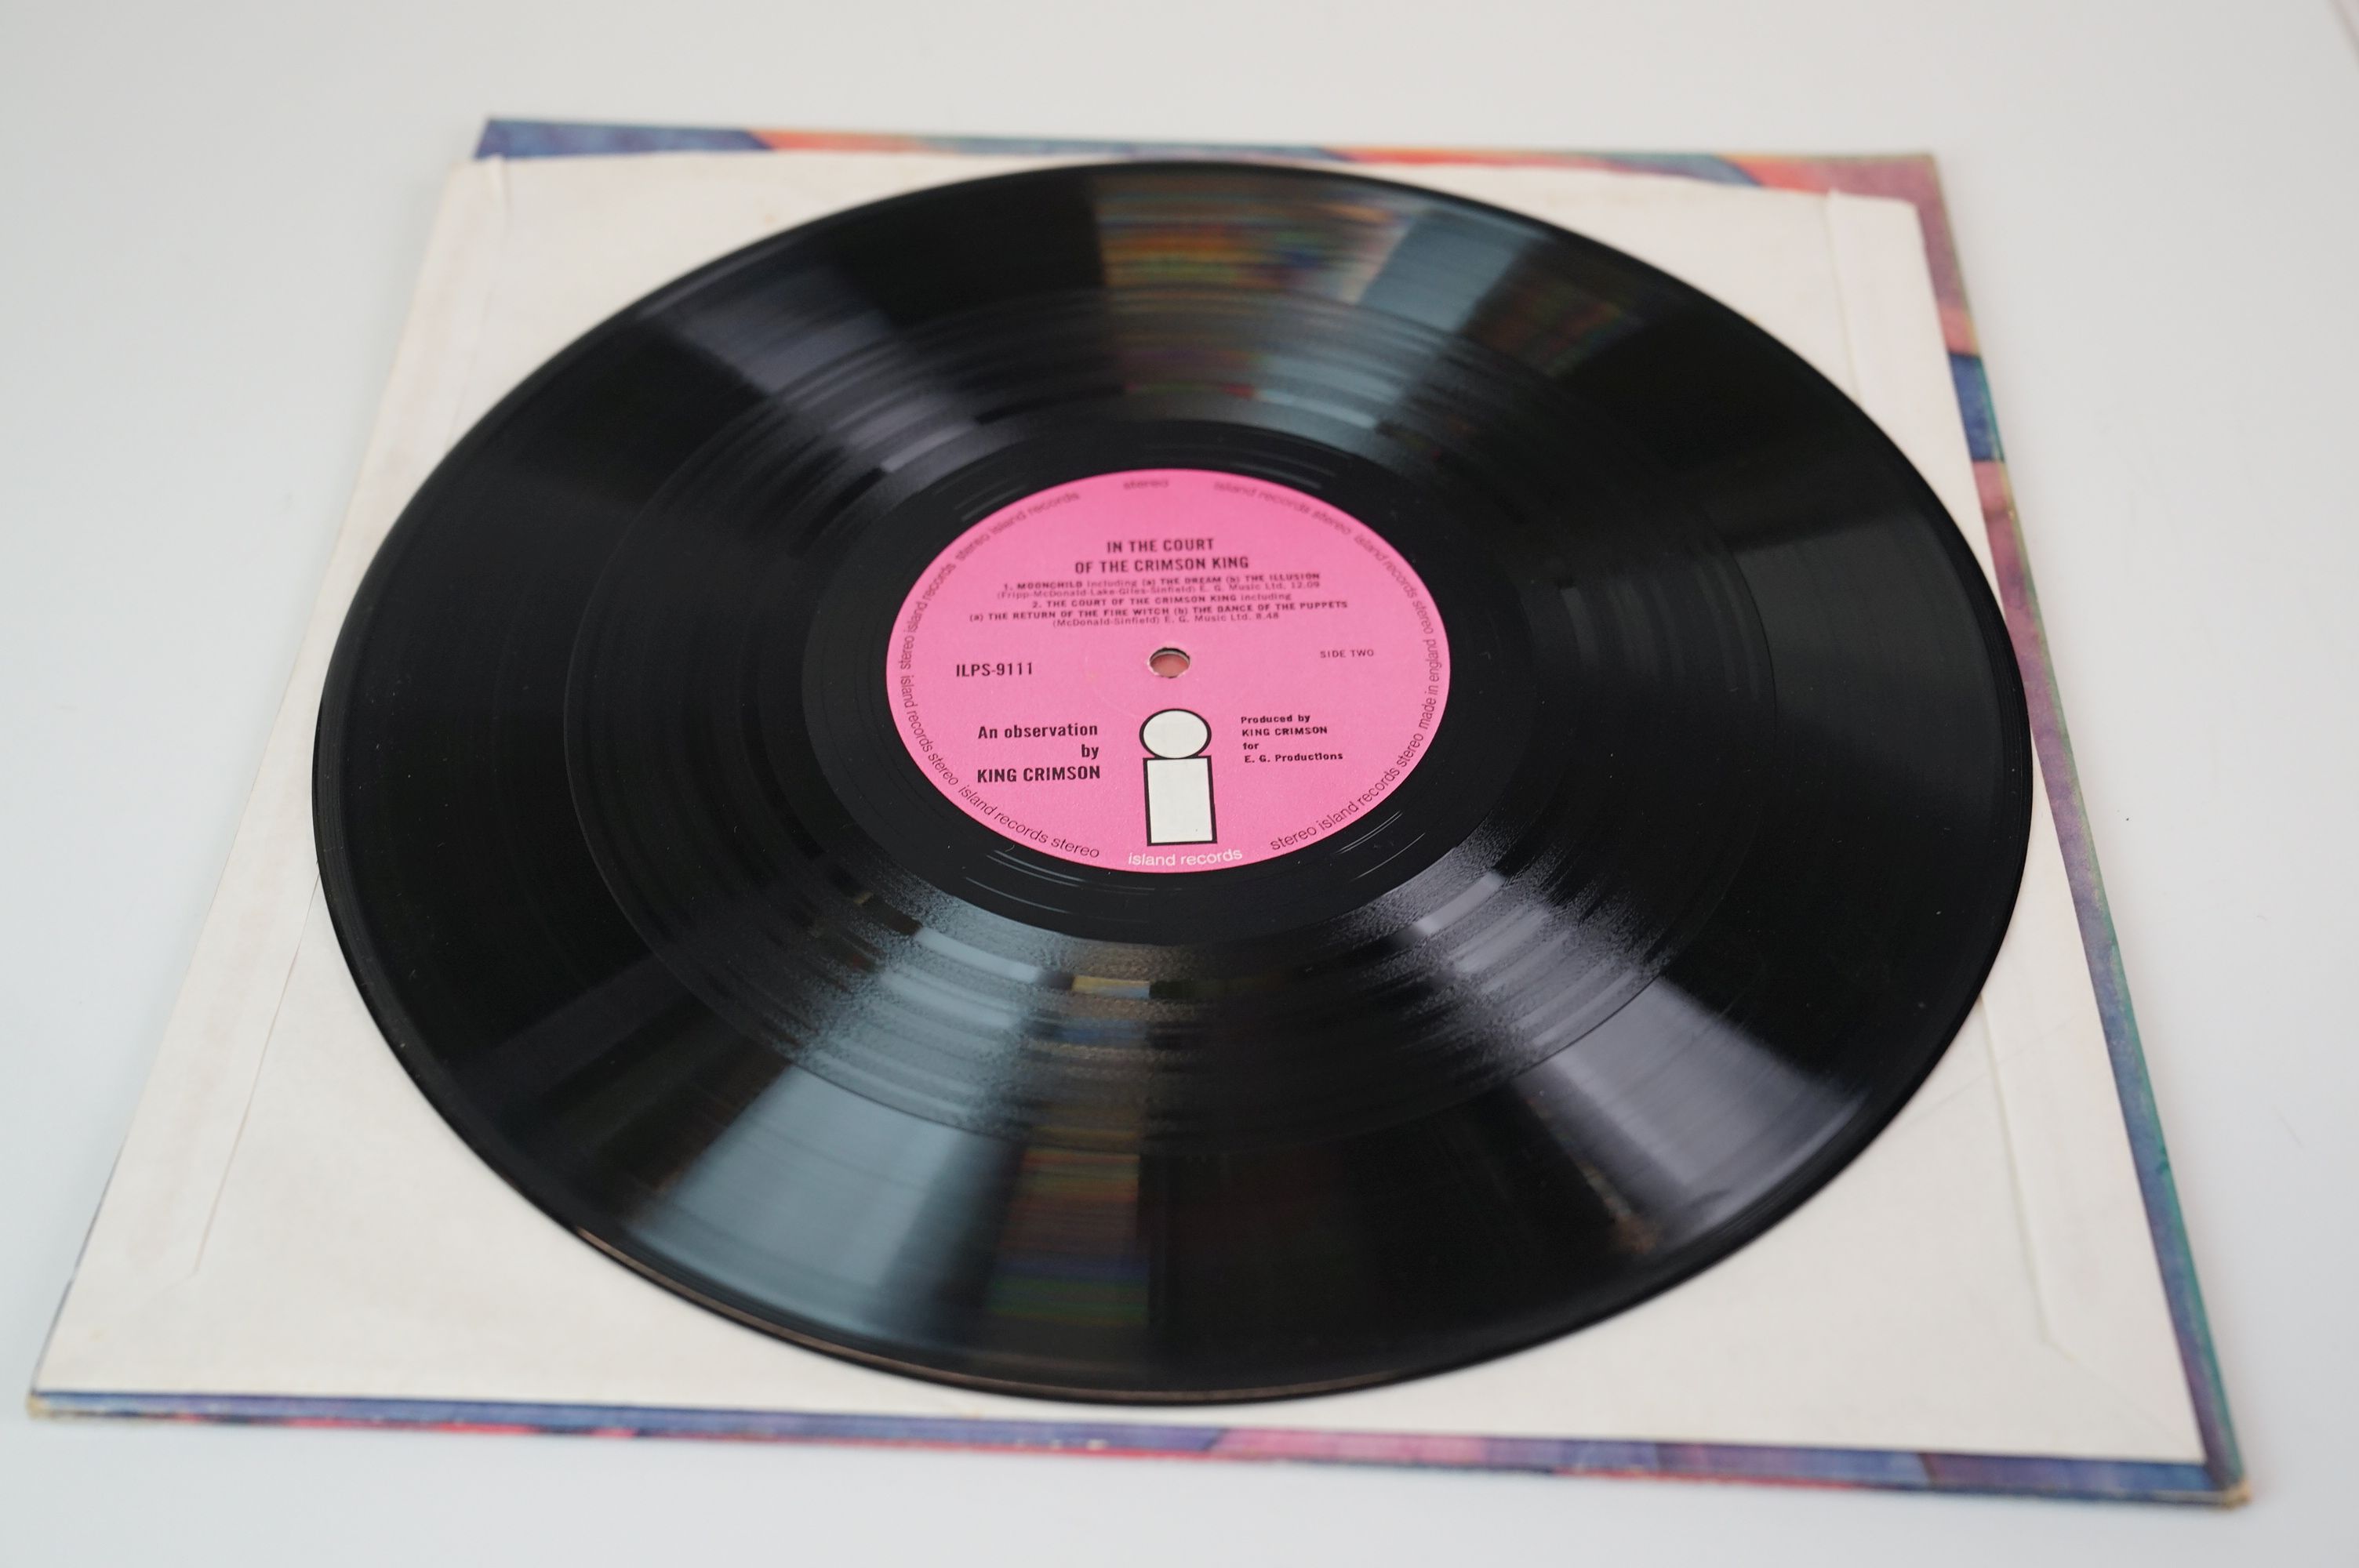 Vinyl - King Crimson In The Court LP on Island ILPS 9111, pink 'i' logo label, vinyl vg+, sleeves - Image 6 of 10